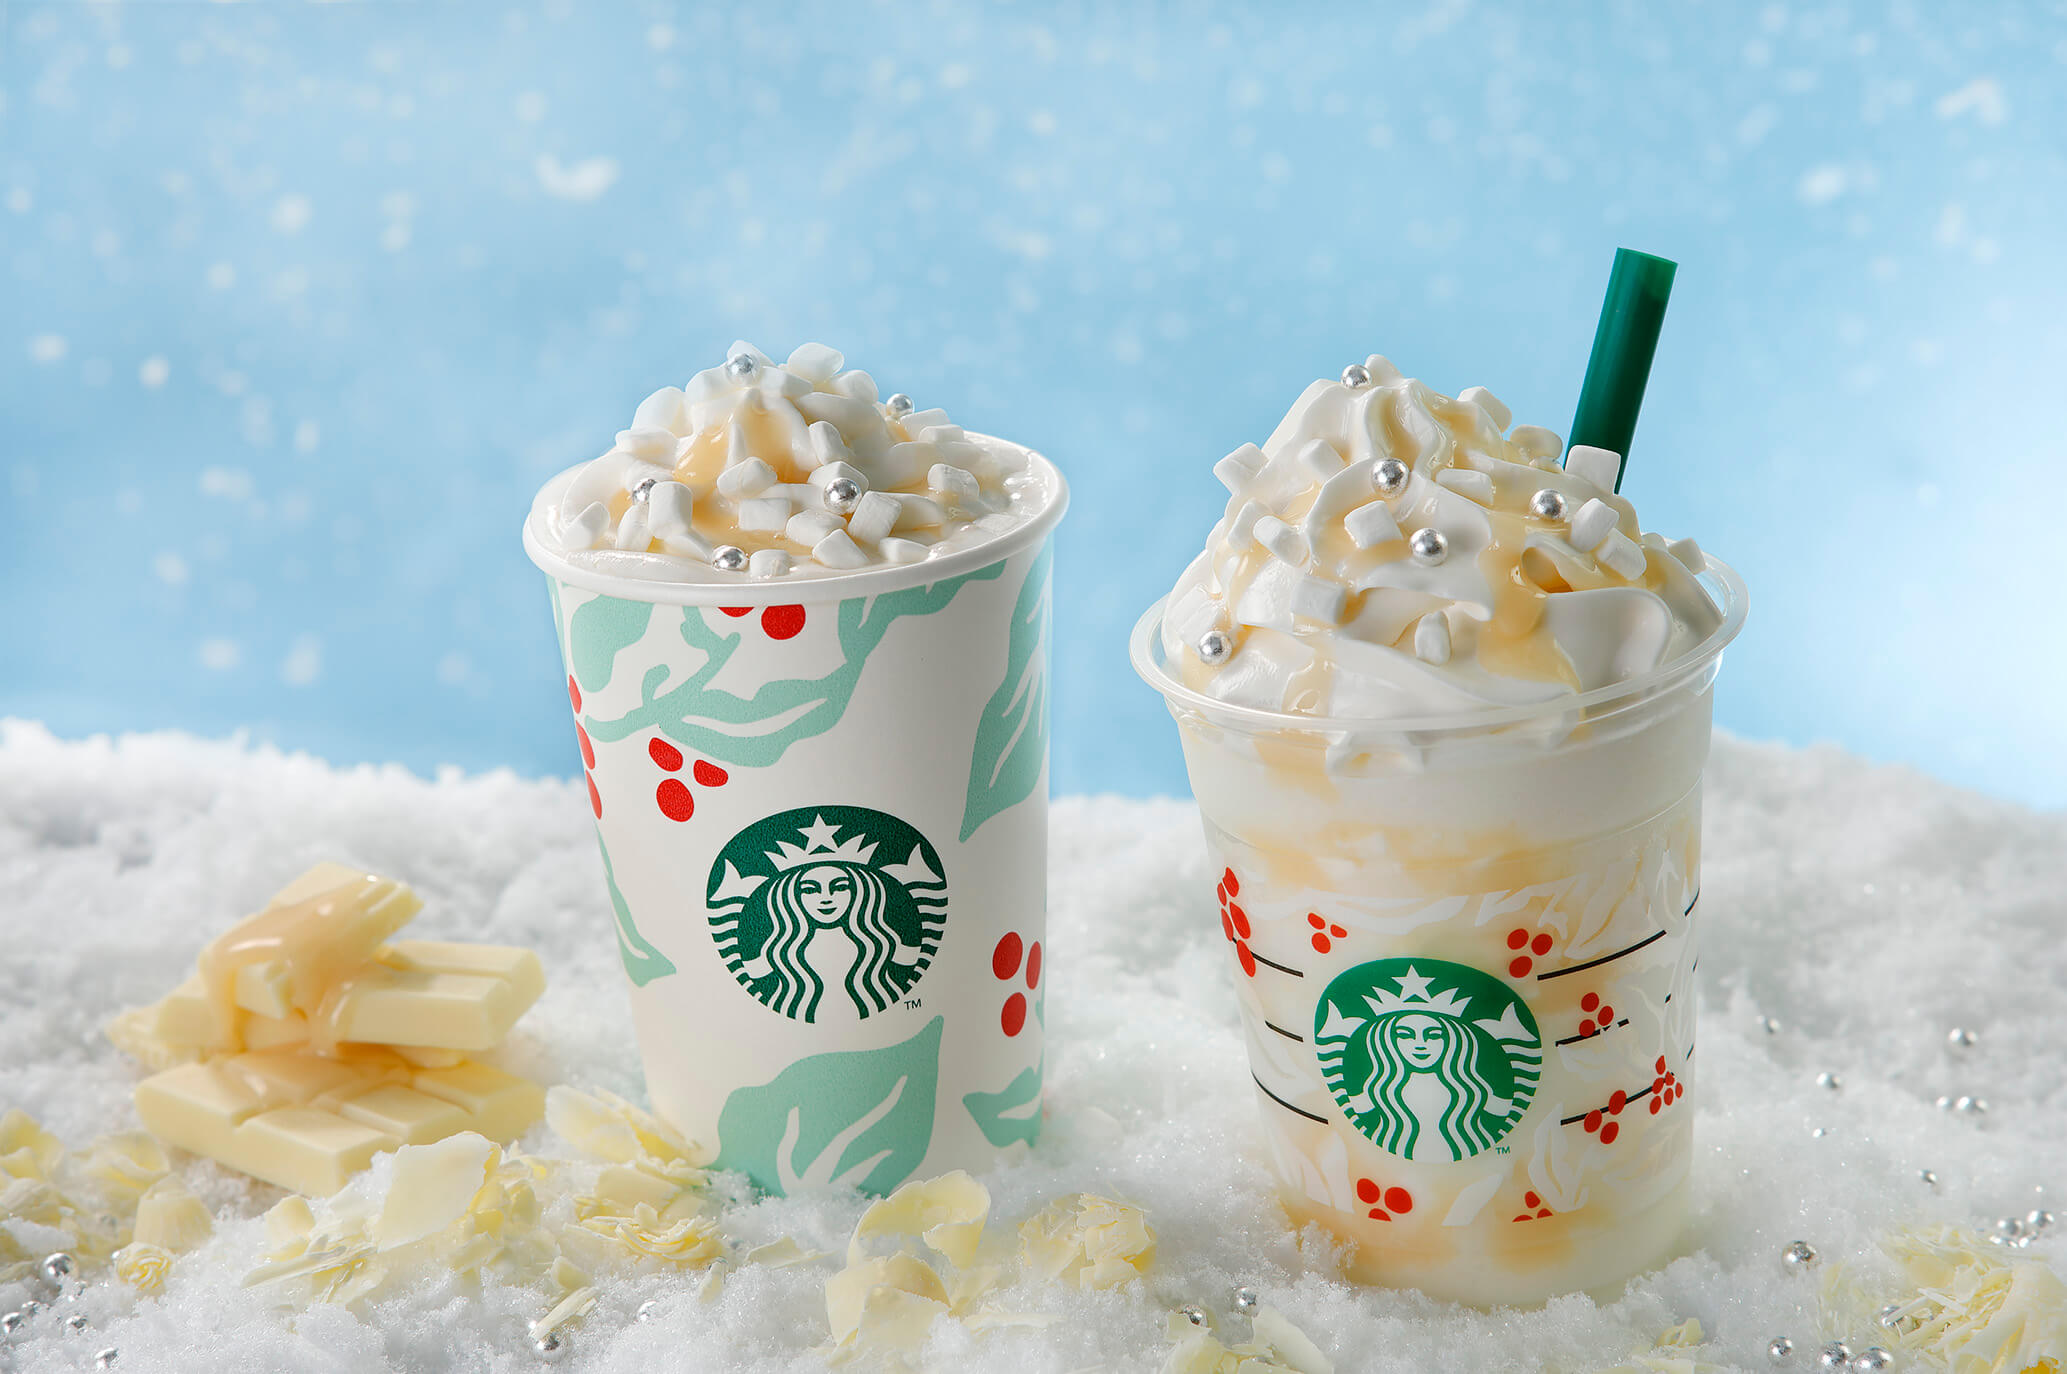 Tumbler Star Starbucks Christmas Holiday 2023 - Meccha Japan